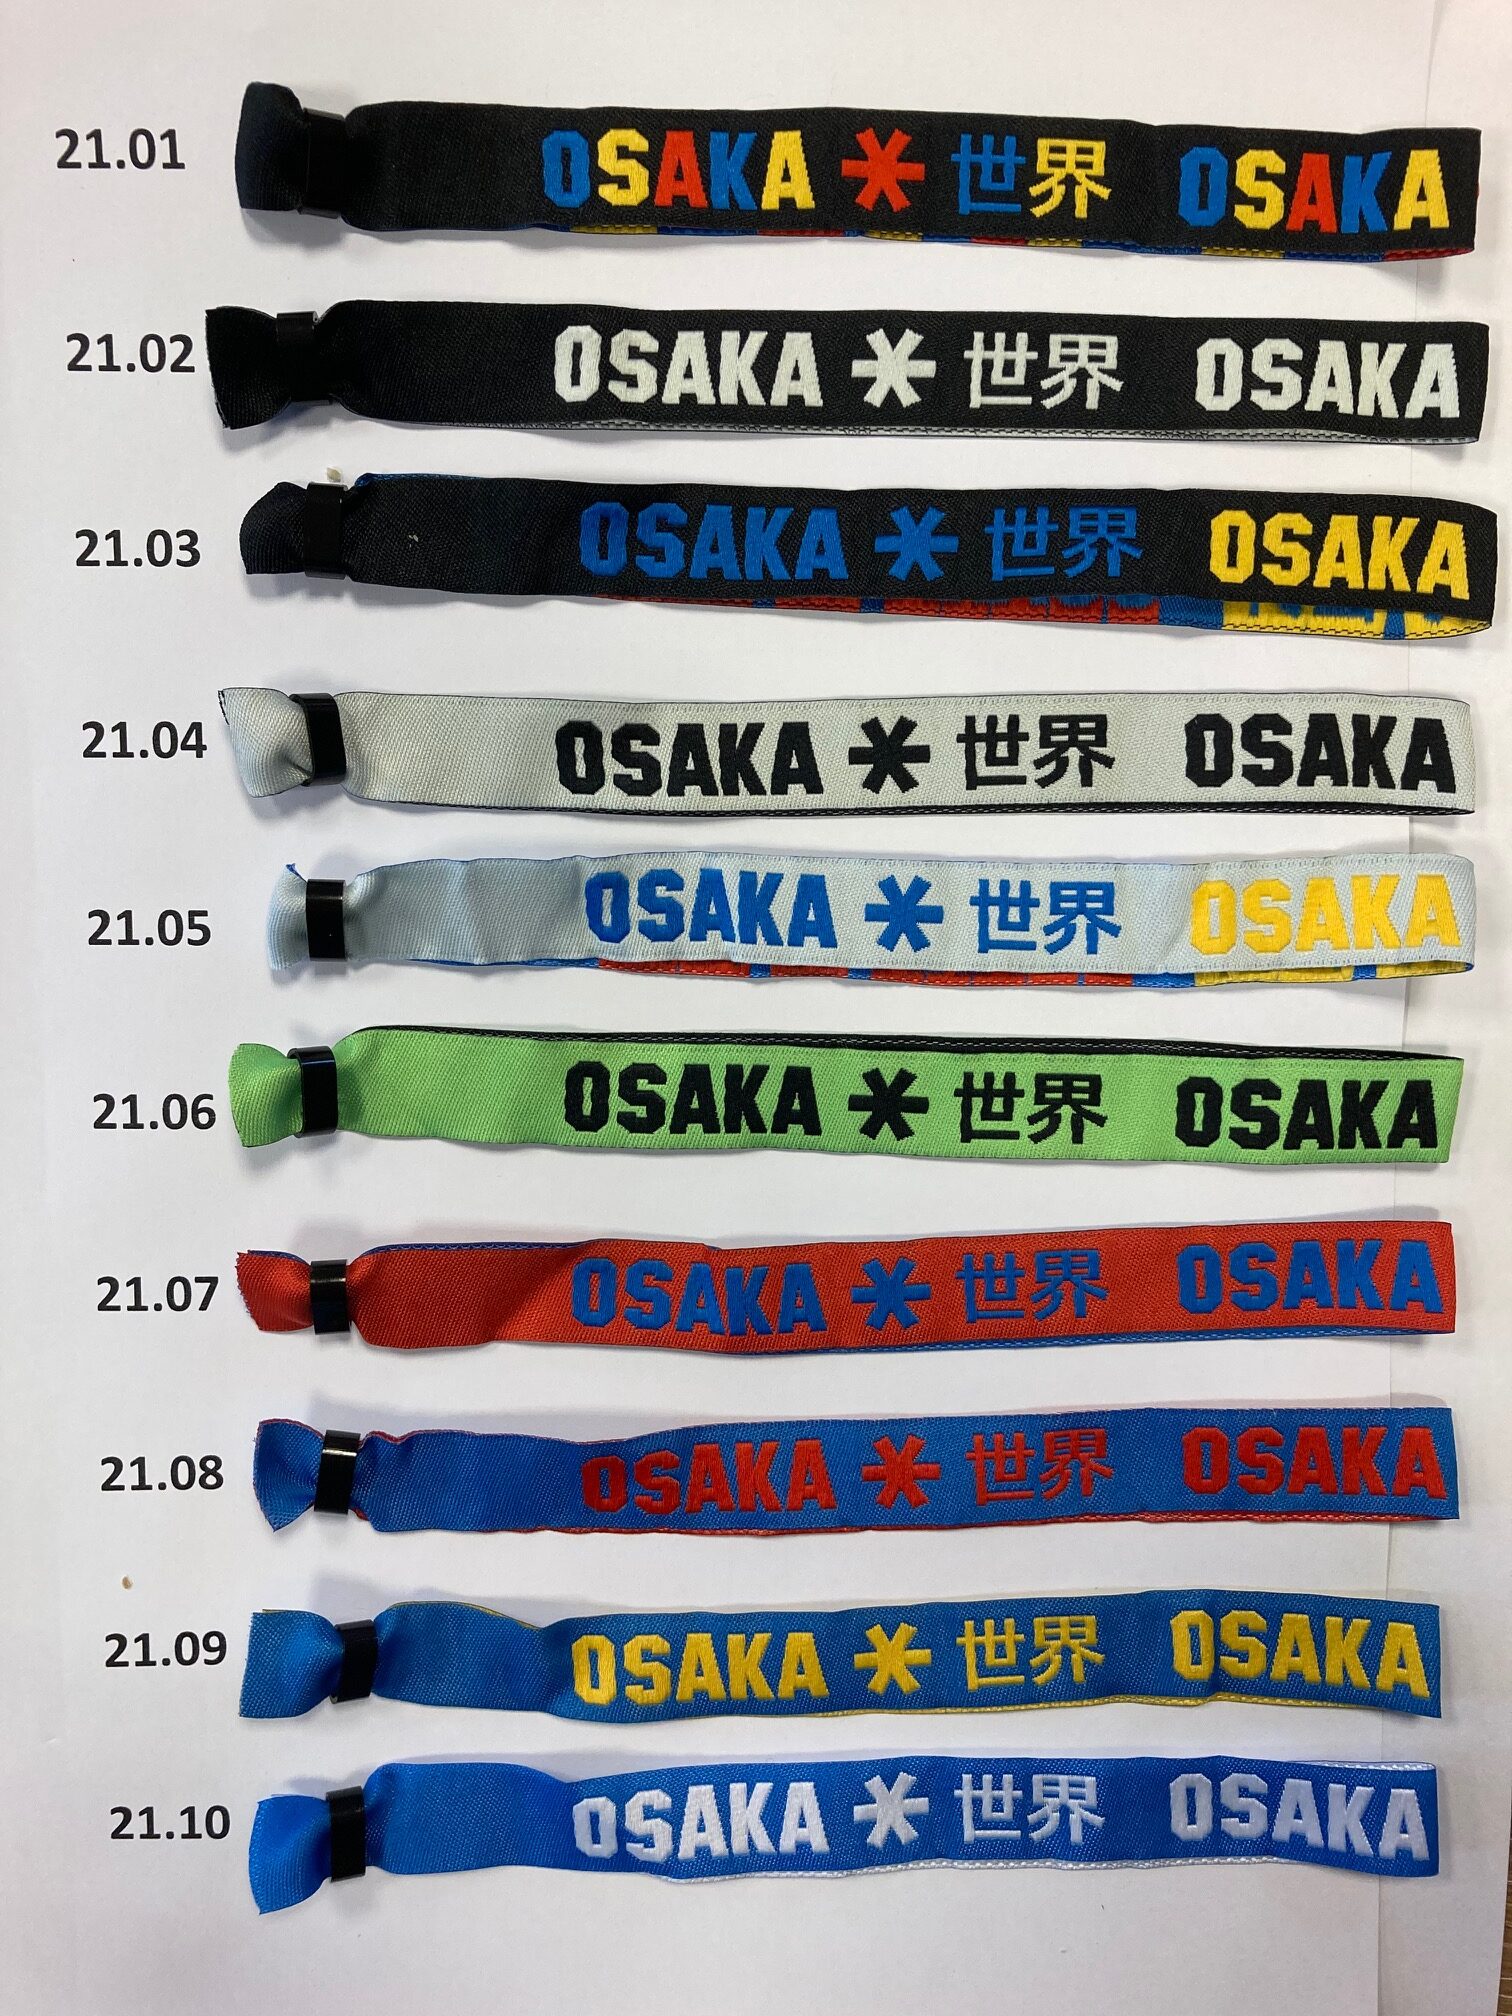 Handel langs Betekenisvol Osaka armbandjes bracelets bij 10 bandjes 11de GRATIS - De Hockeyzaak